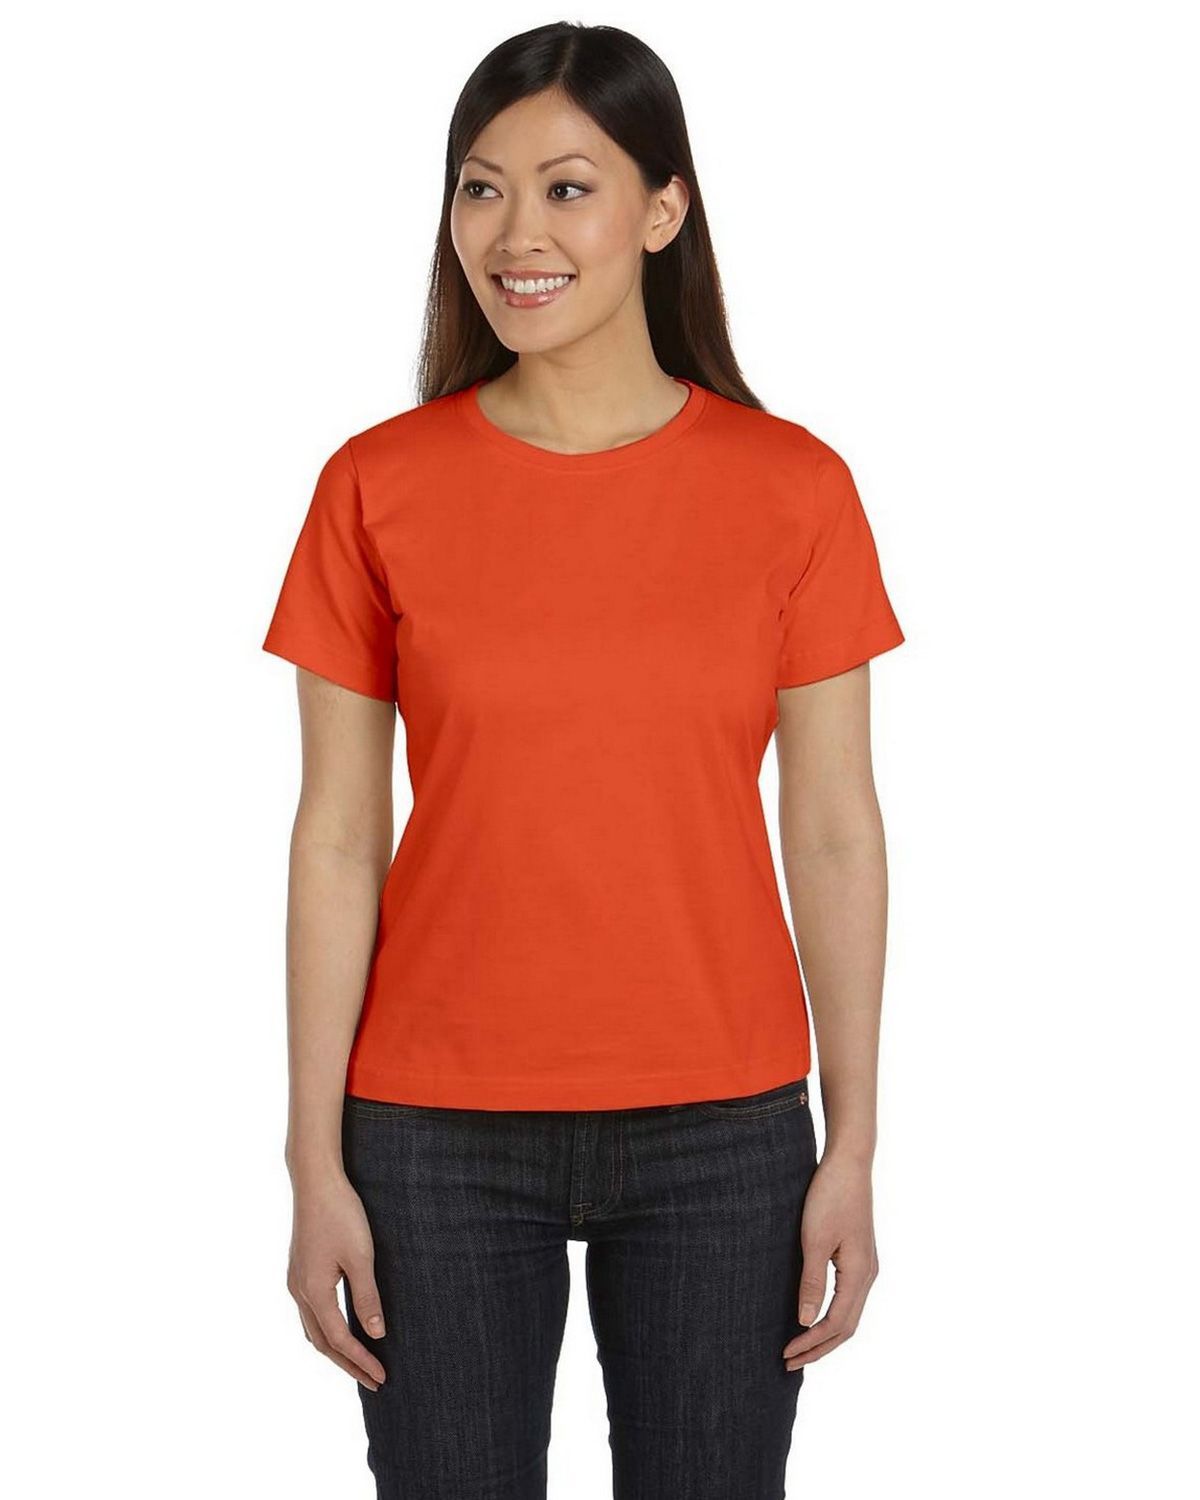 LAT 3580 Women Ringspun Scoop Neck T-Shirt - ApparelnBags.com